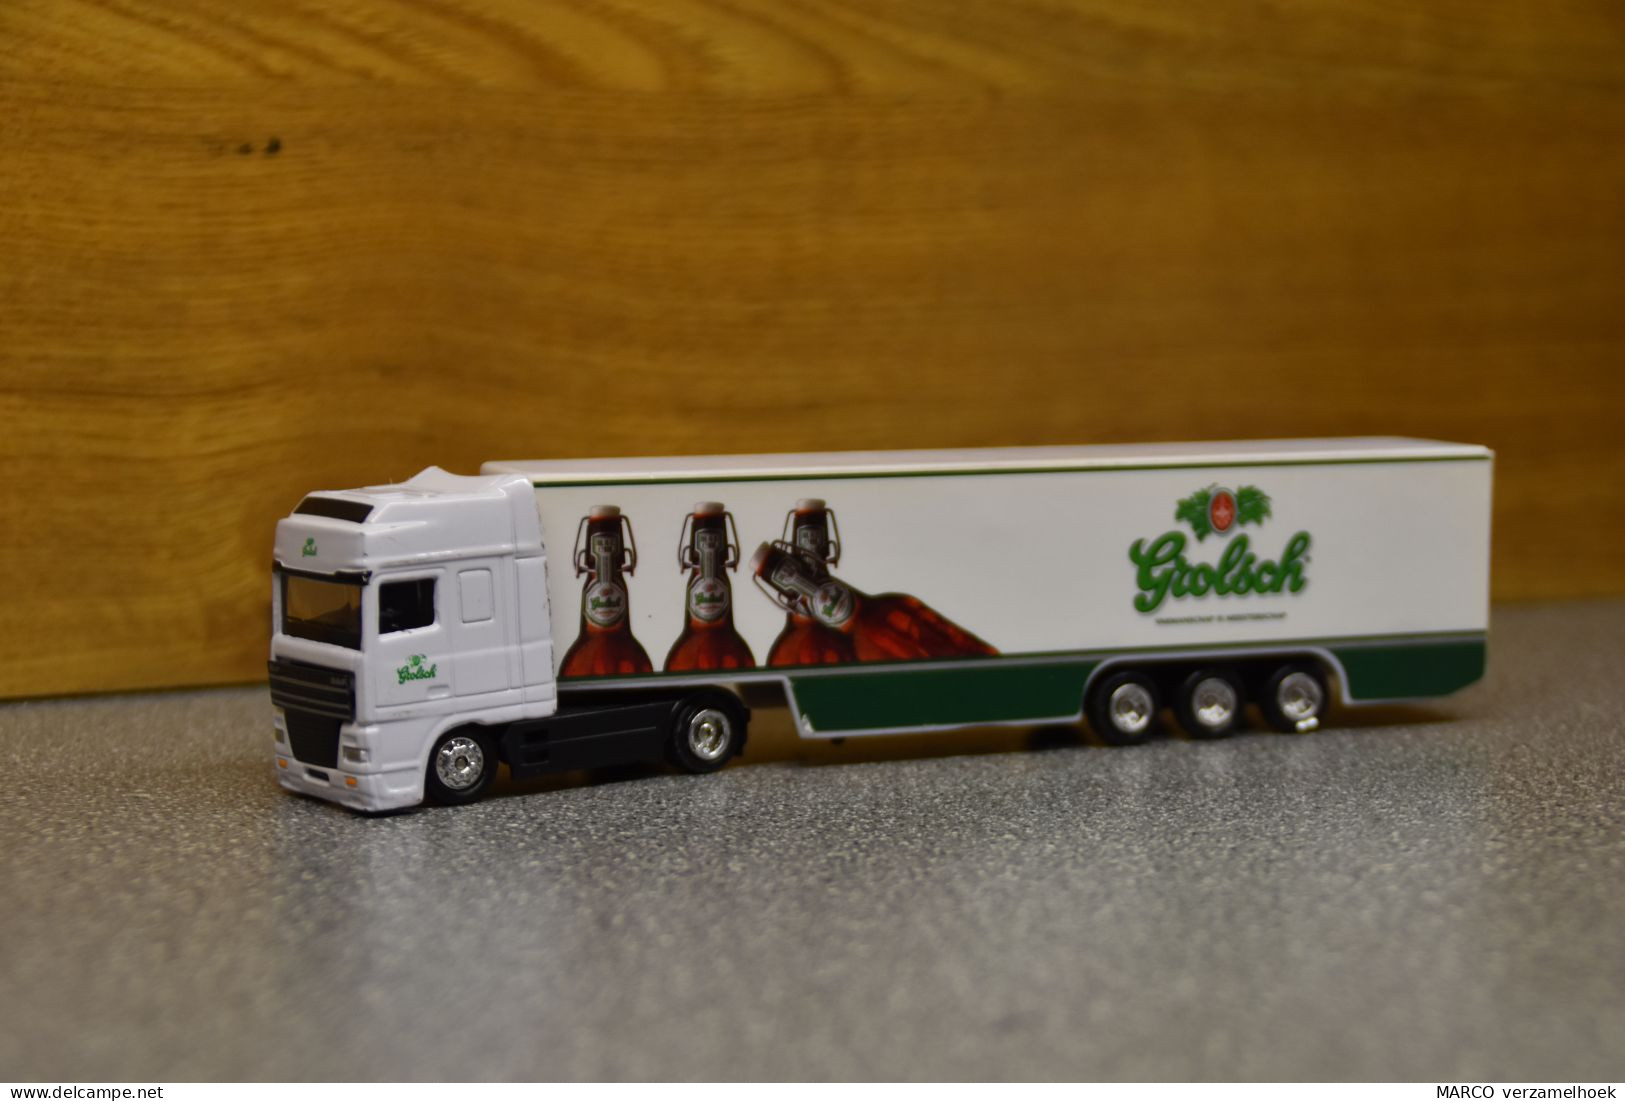 Vrachtwagen-truck Grolsch Bieren Groenlo-enschede (NL) Scale 1:87 DAF - Scale 1:87